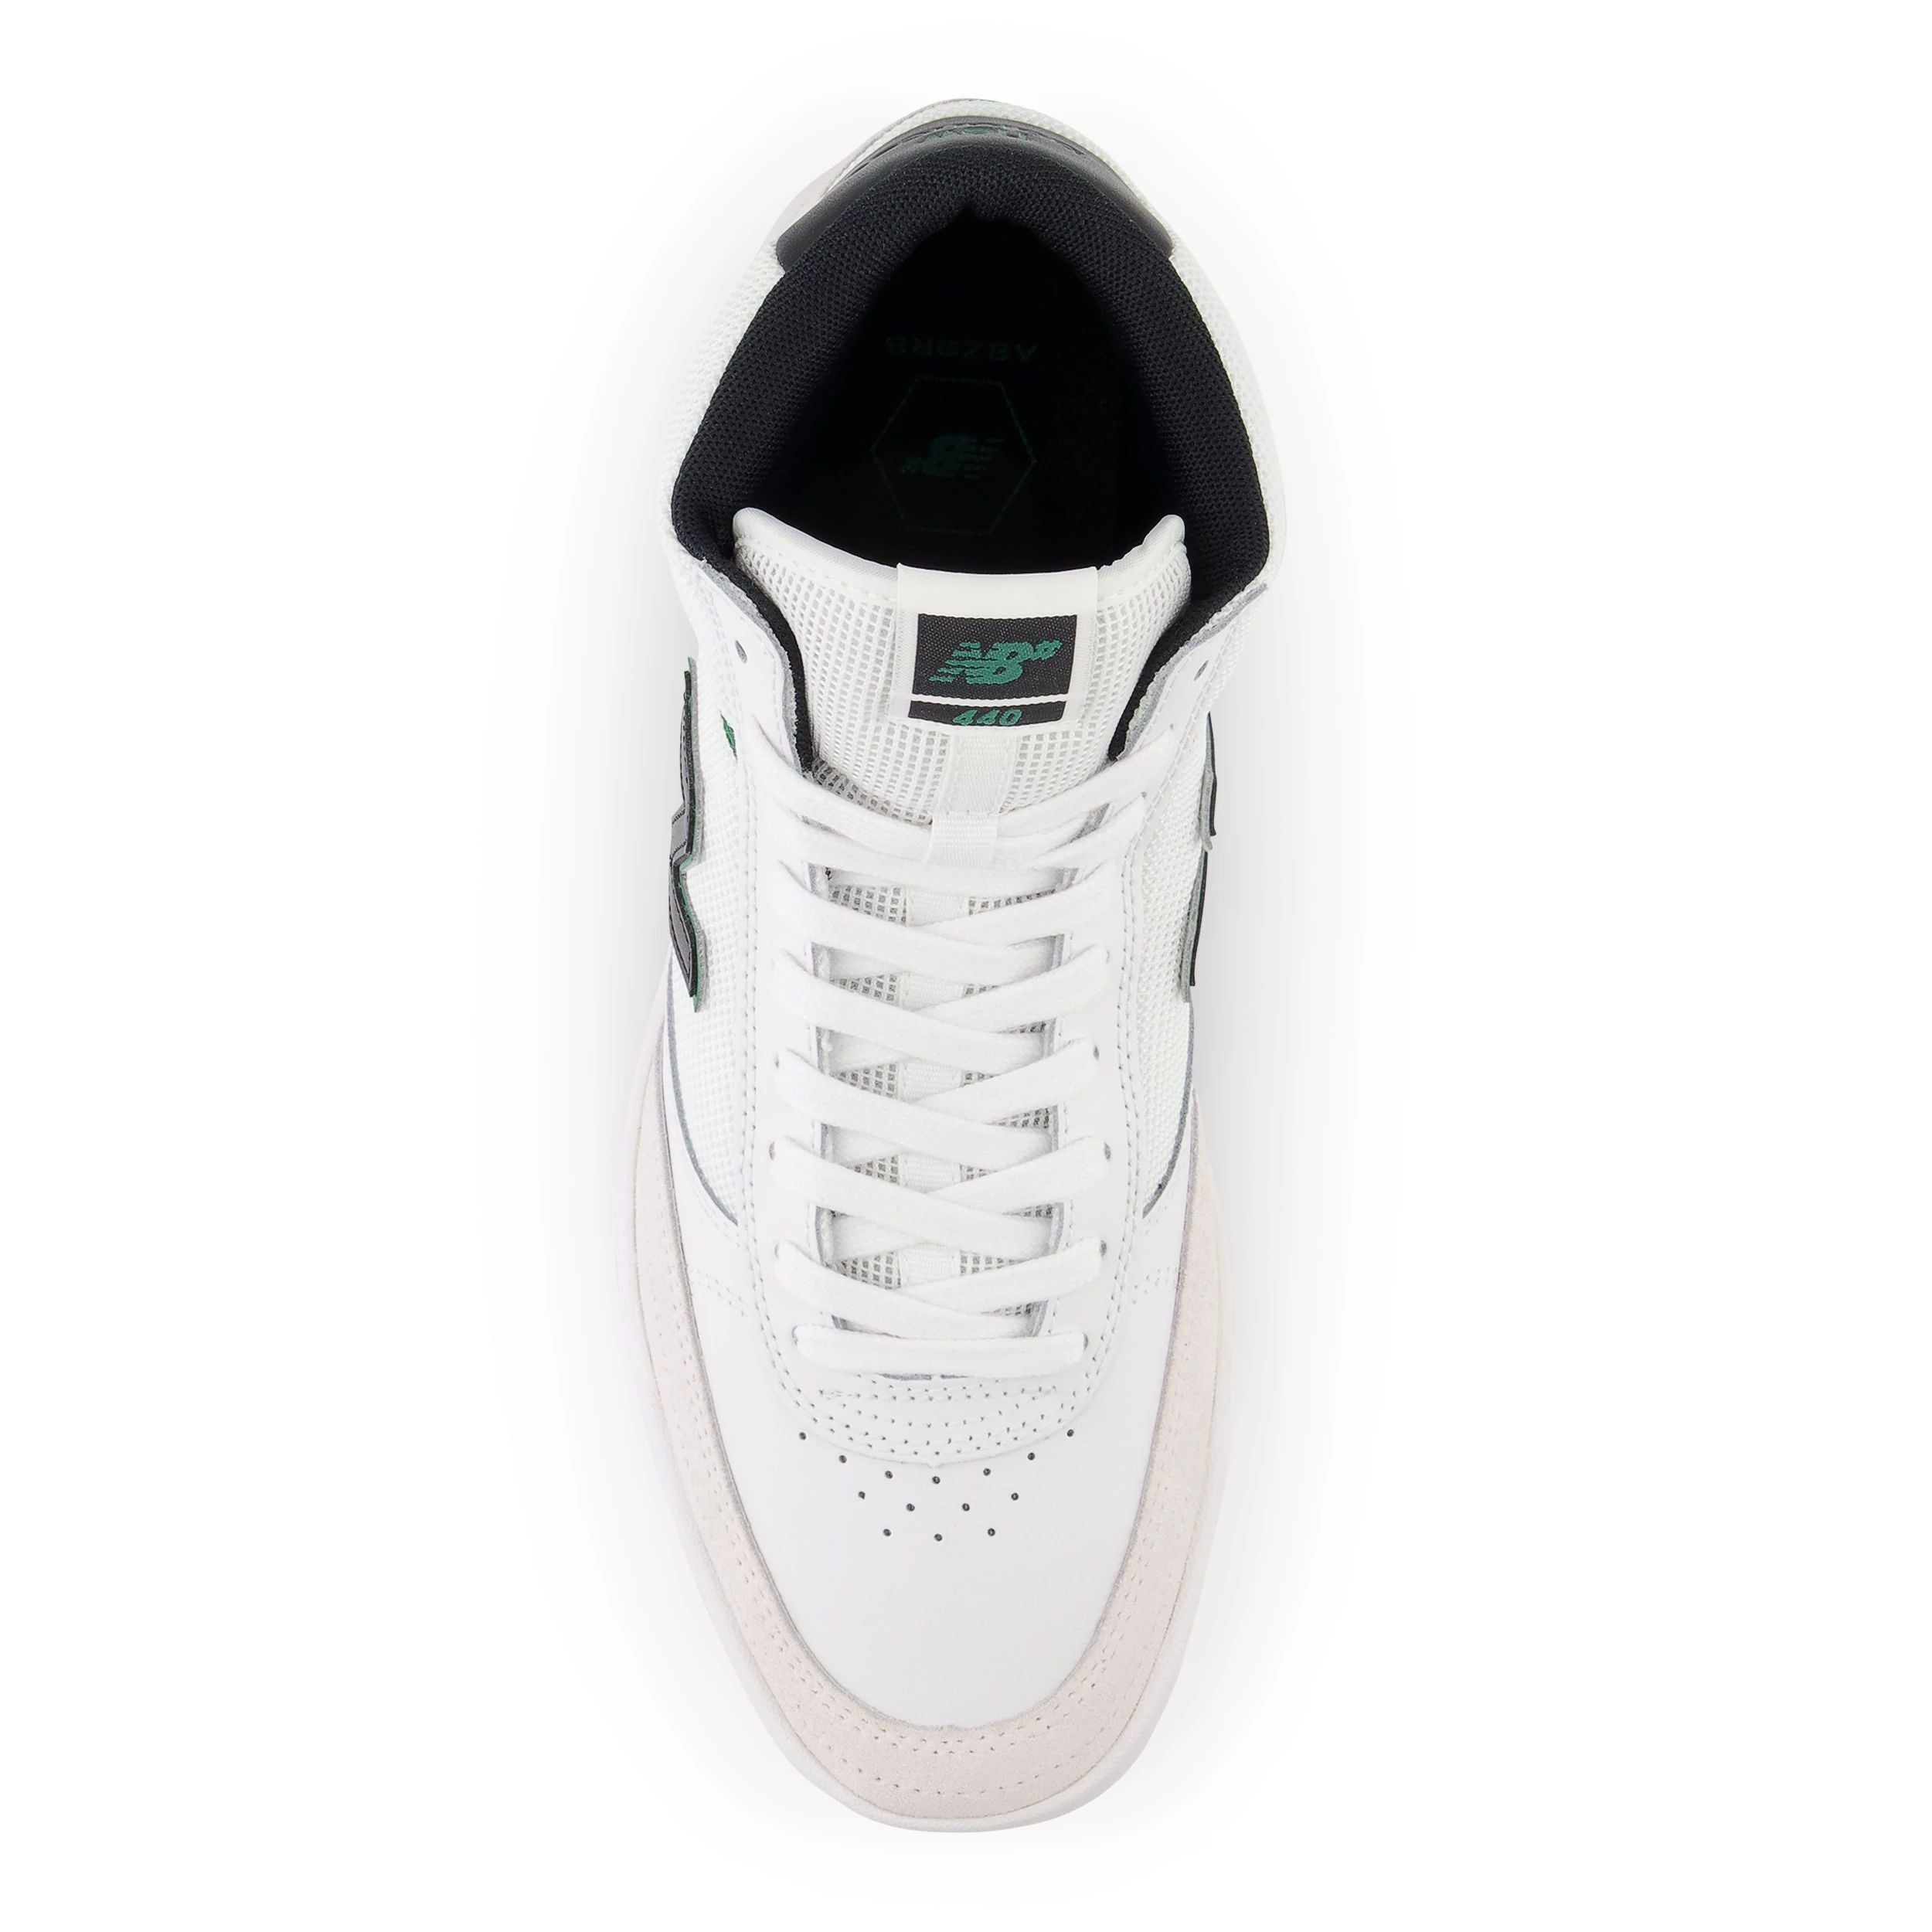 White/Black NM440 High NB Numeric Skate Shoe Top